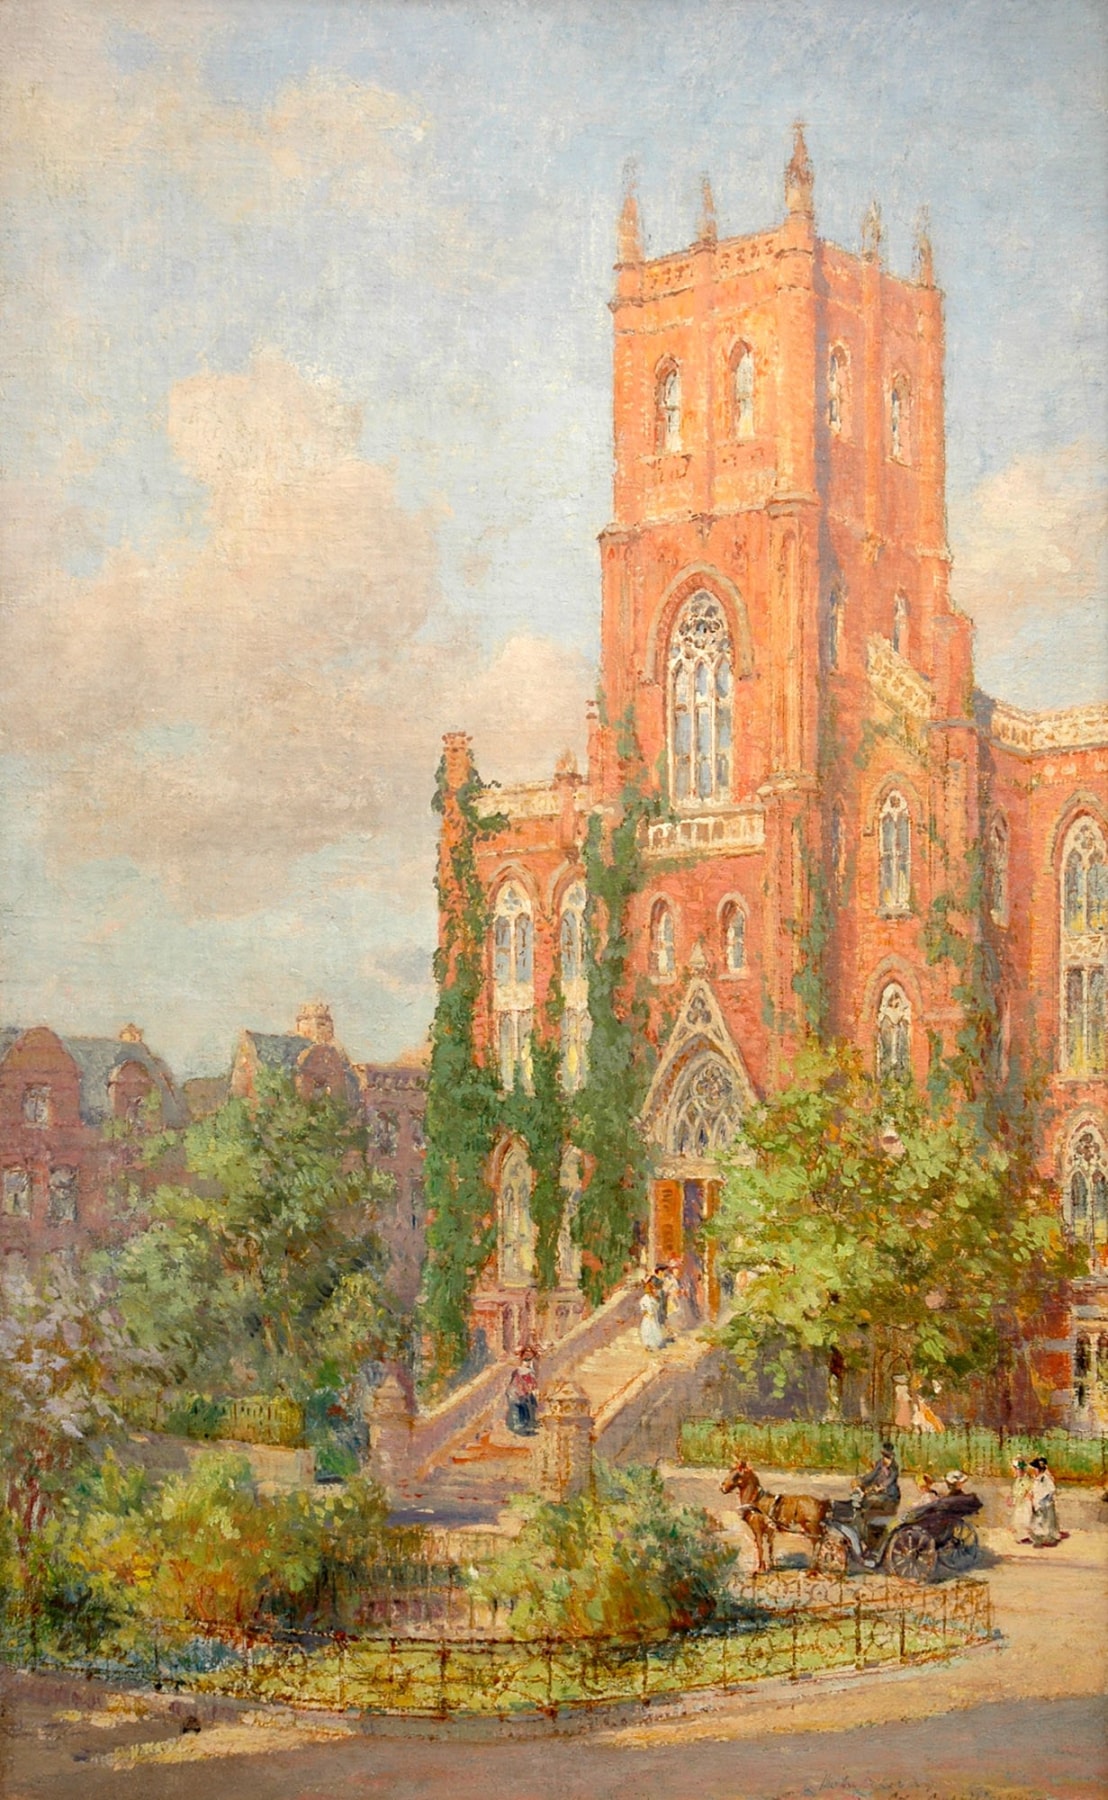 COLIN CAMPBELL COOPER (1856-1937), Hunter College, c. 1910